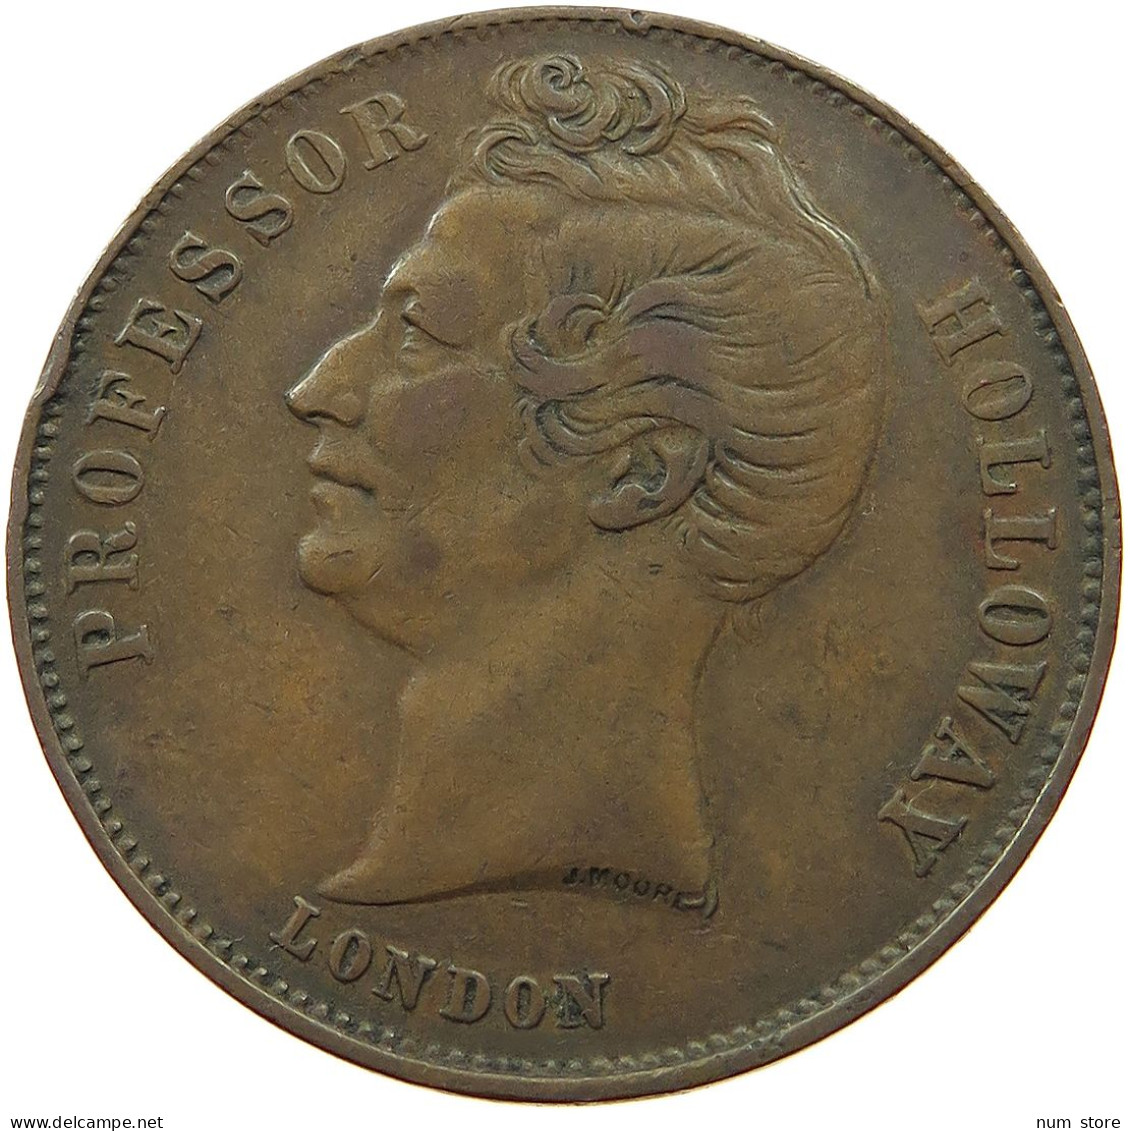 AUSTRALIA HALF PENNY TOKEN 1857 Victoria (1837-1901) PROFESSOR 1857 HOLLOWAY LONDON #t059 0203 - ½ Penny